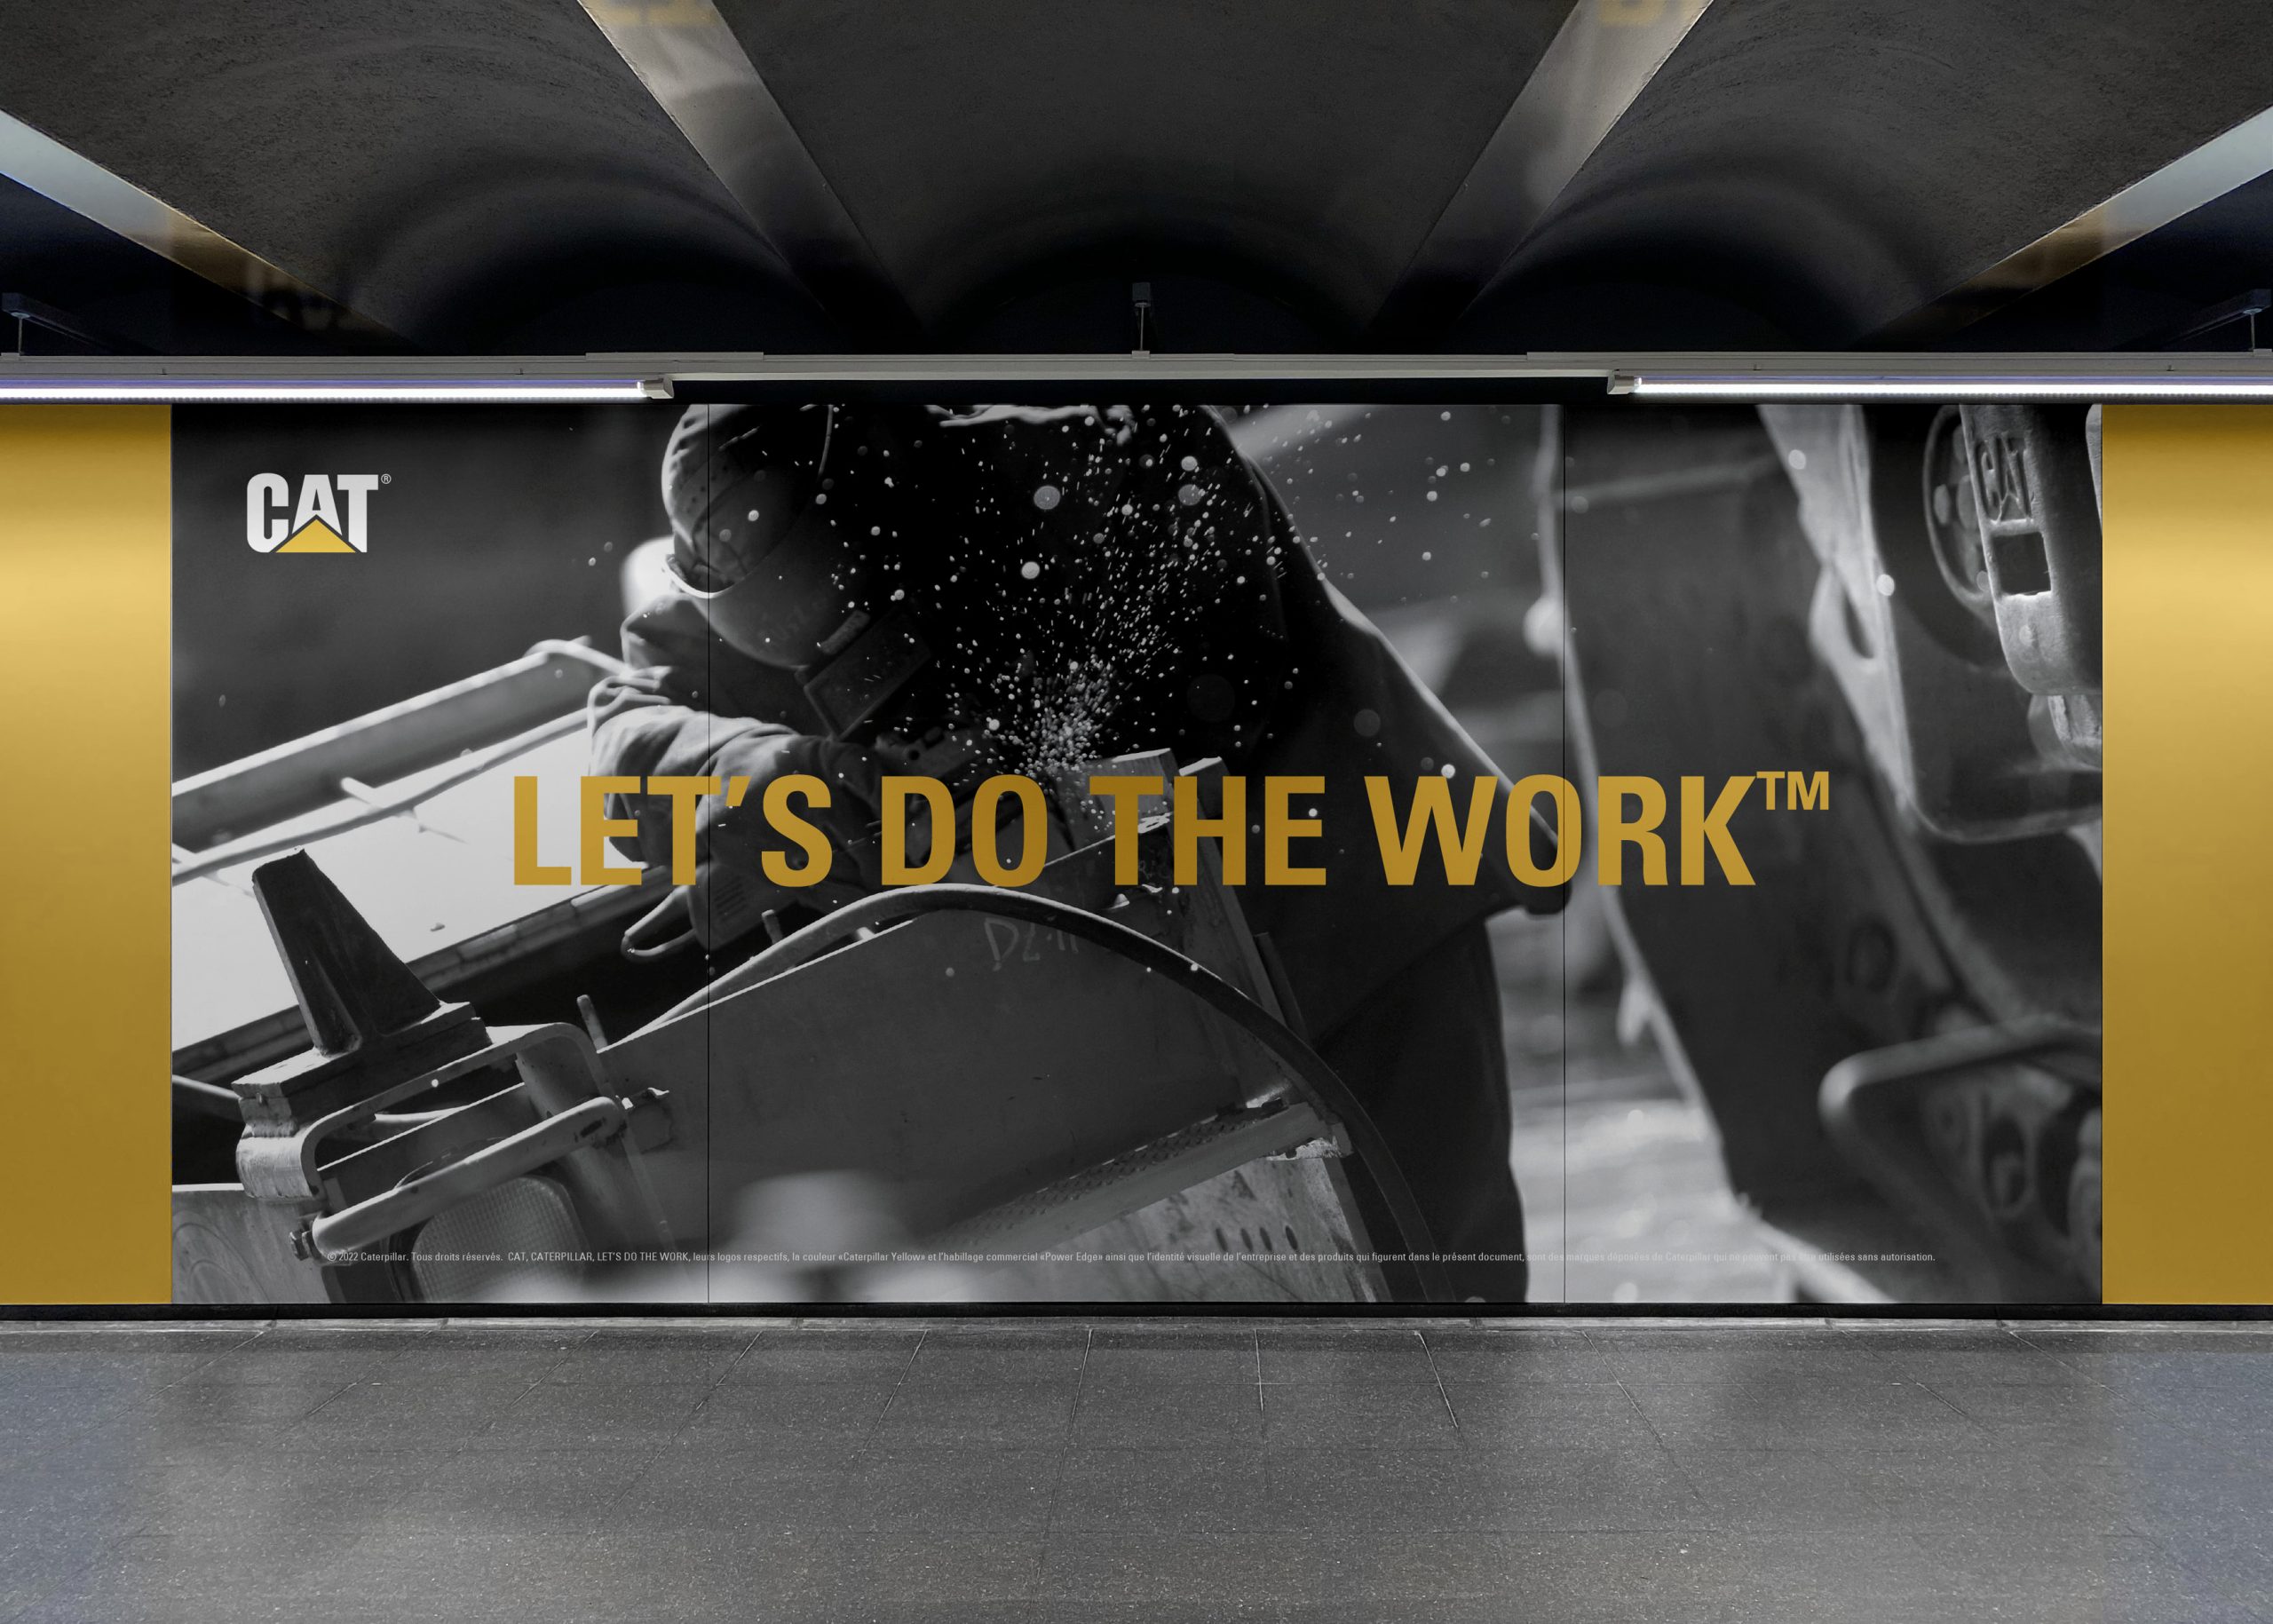 Campagne d'affichage métro "Let's do the work"